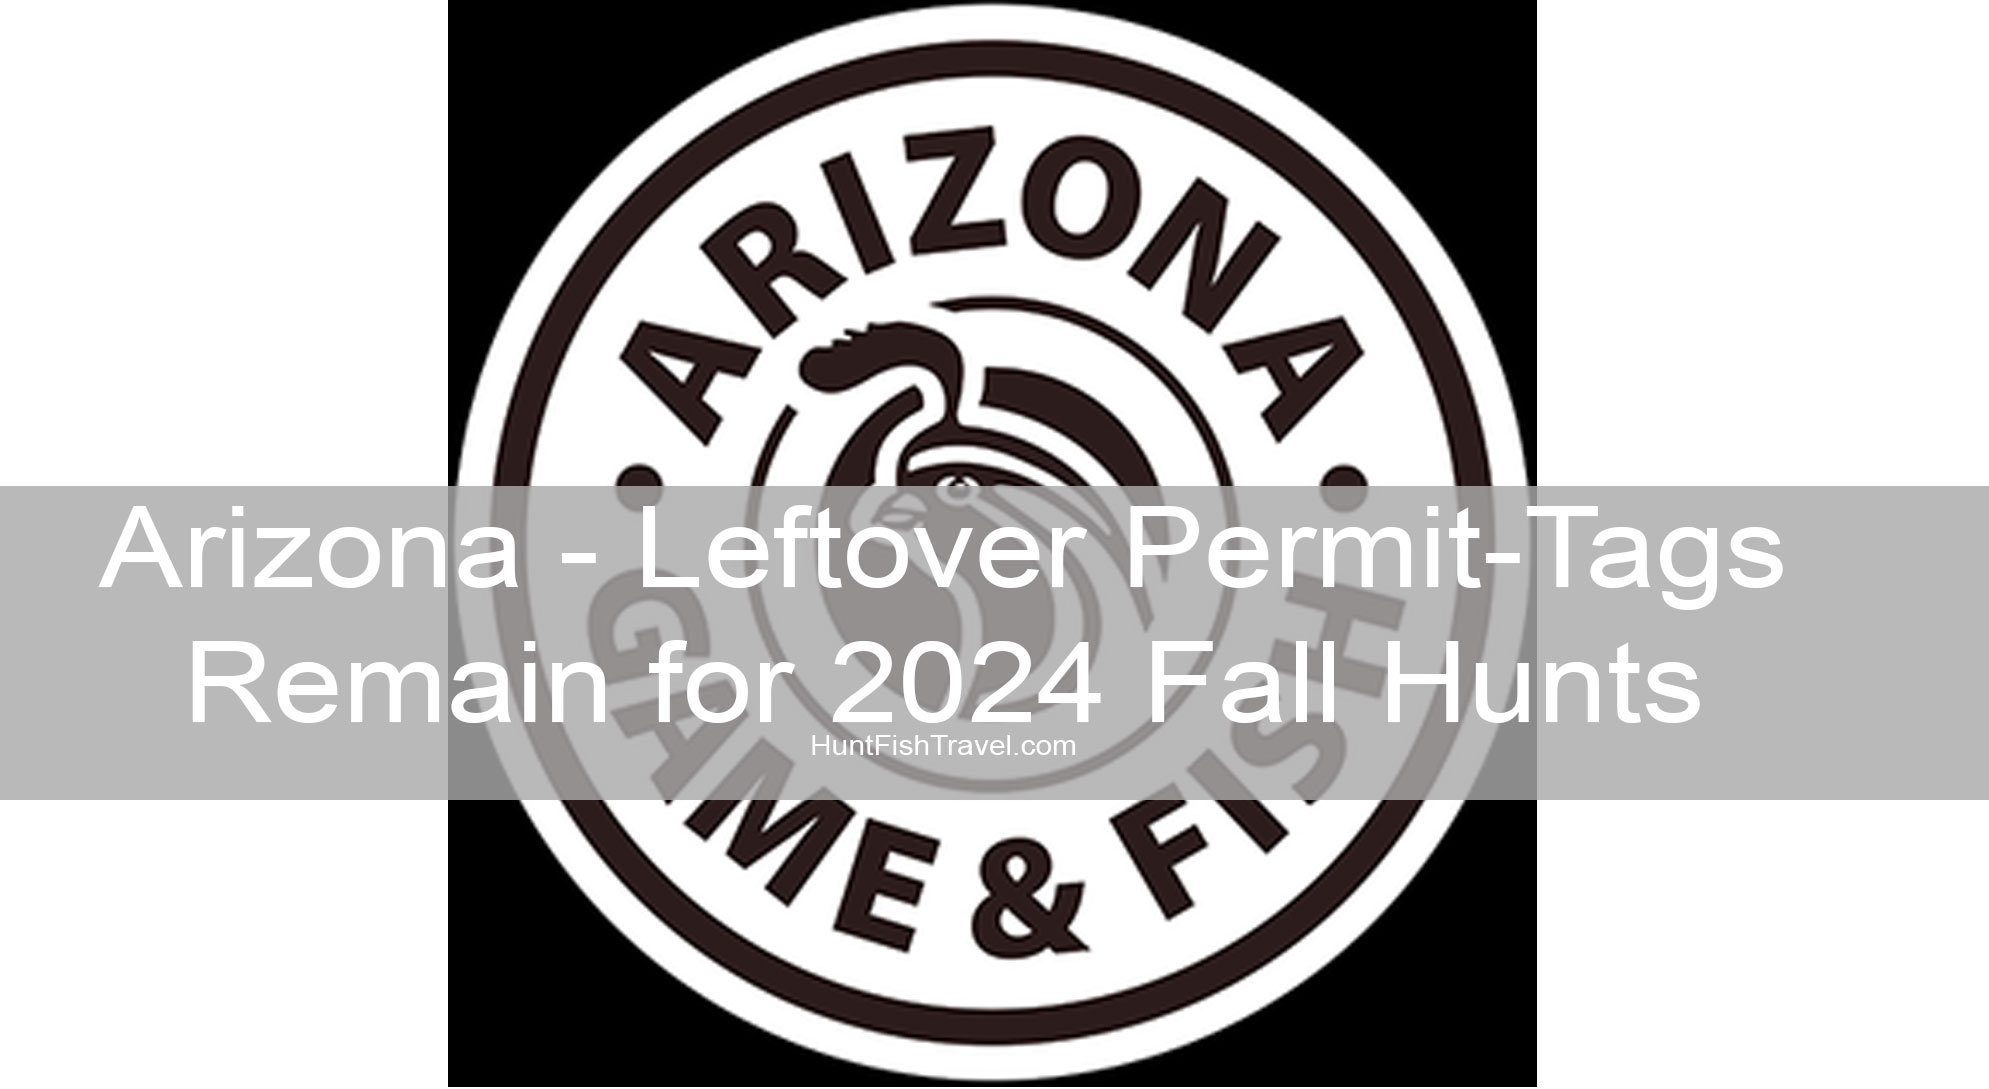 Arizona - Leftover Permit-Tags Remain for 2024 Fall Hunts